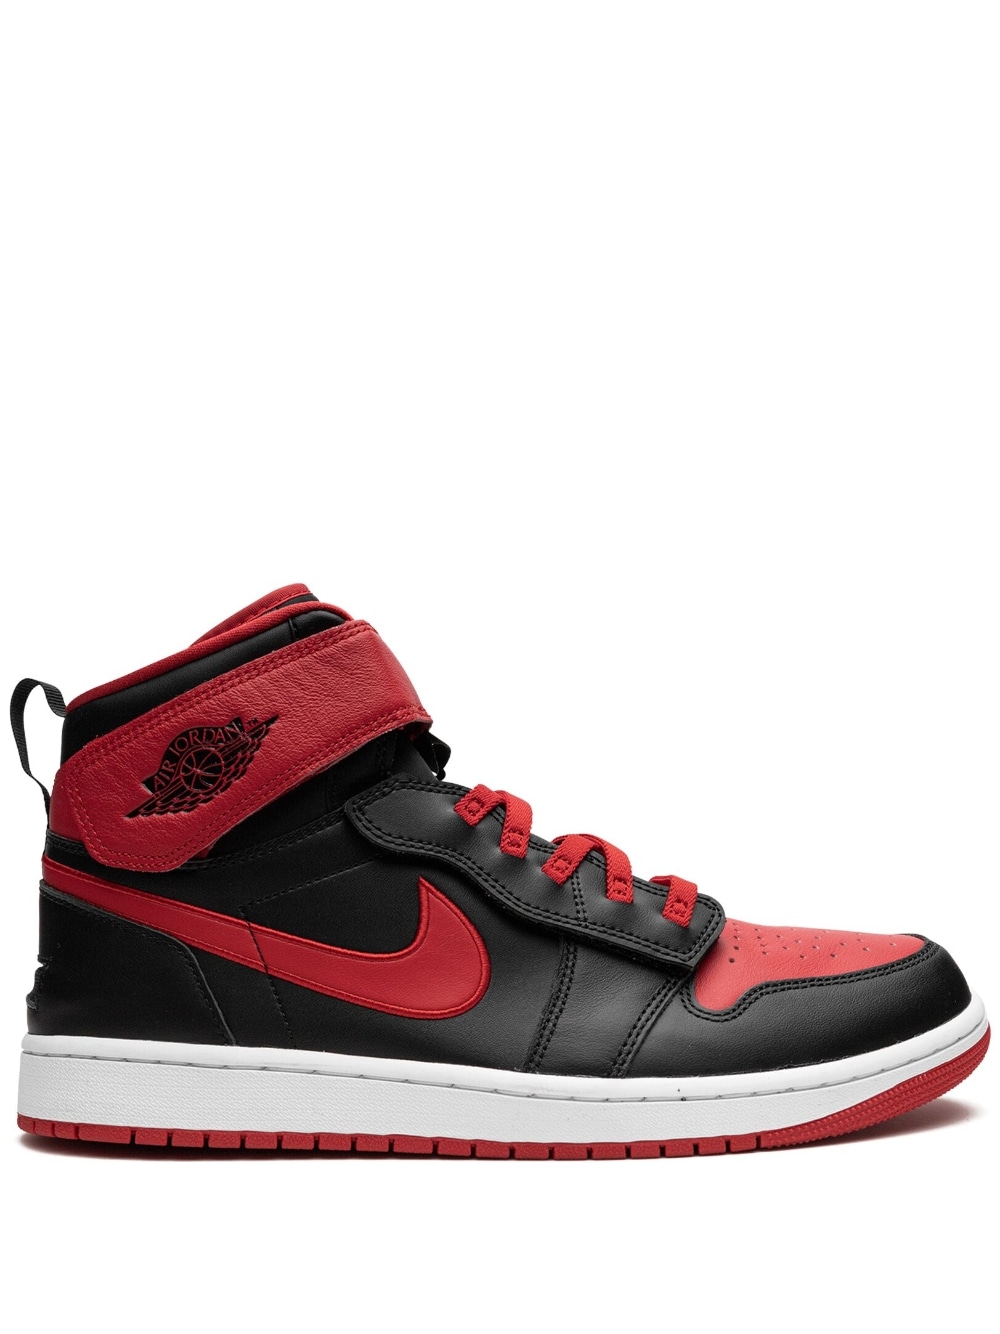 Jordan Air Jordan 1 High FlyEase "Bred" sneakers - Black